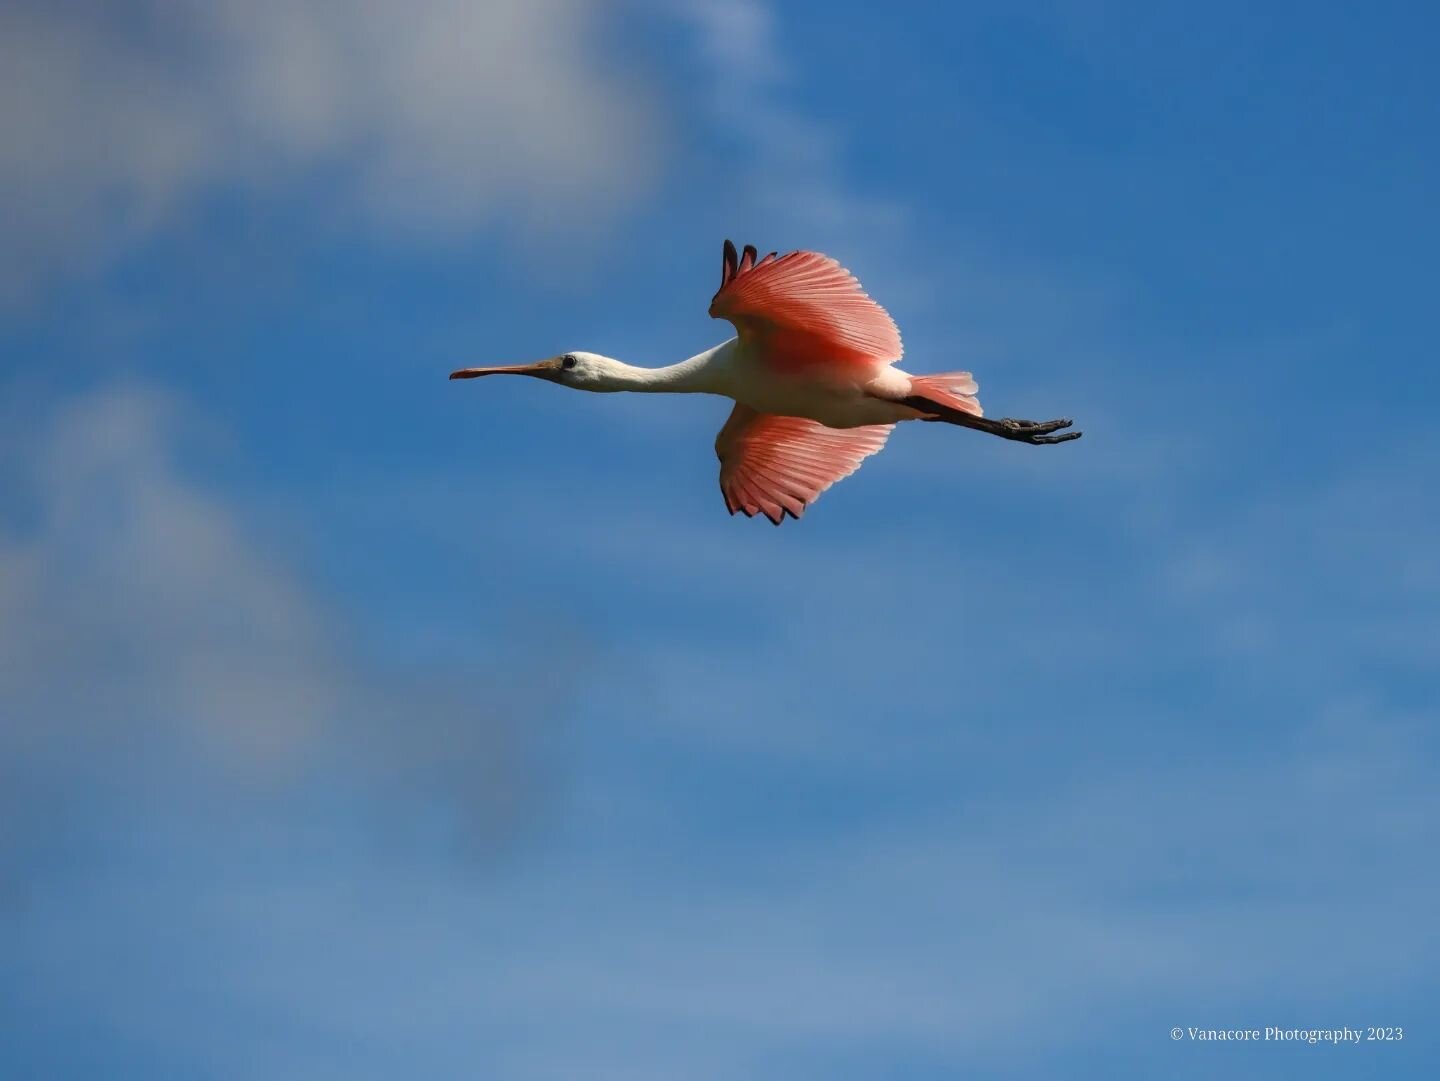 Roseate Spoonbill over Orlando Wetlands Park. Grace and color in flight. #florida #christmasflorida #orlandowetlands #orlandowetlandspark #bird #birdphotography #roseatespoonbill #spoonbill #spoony #sky #pink  #floridabirds #godcreation #glorytogod